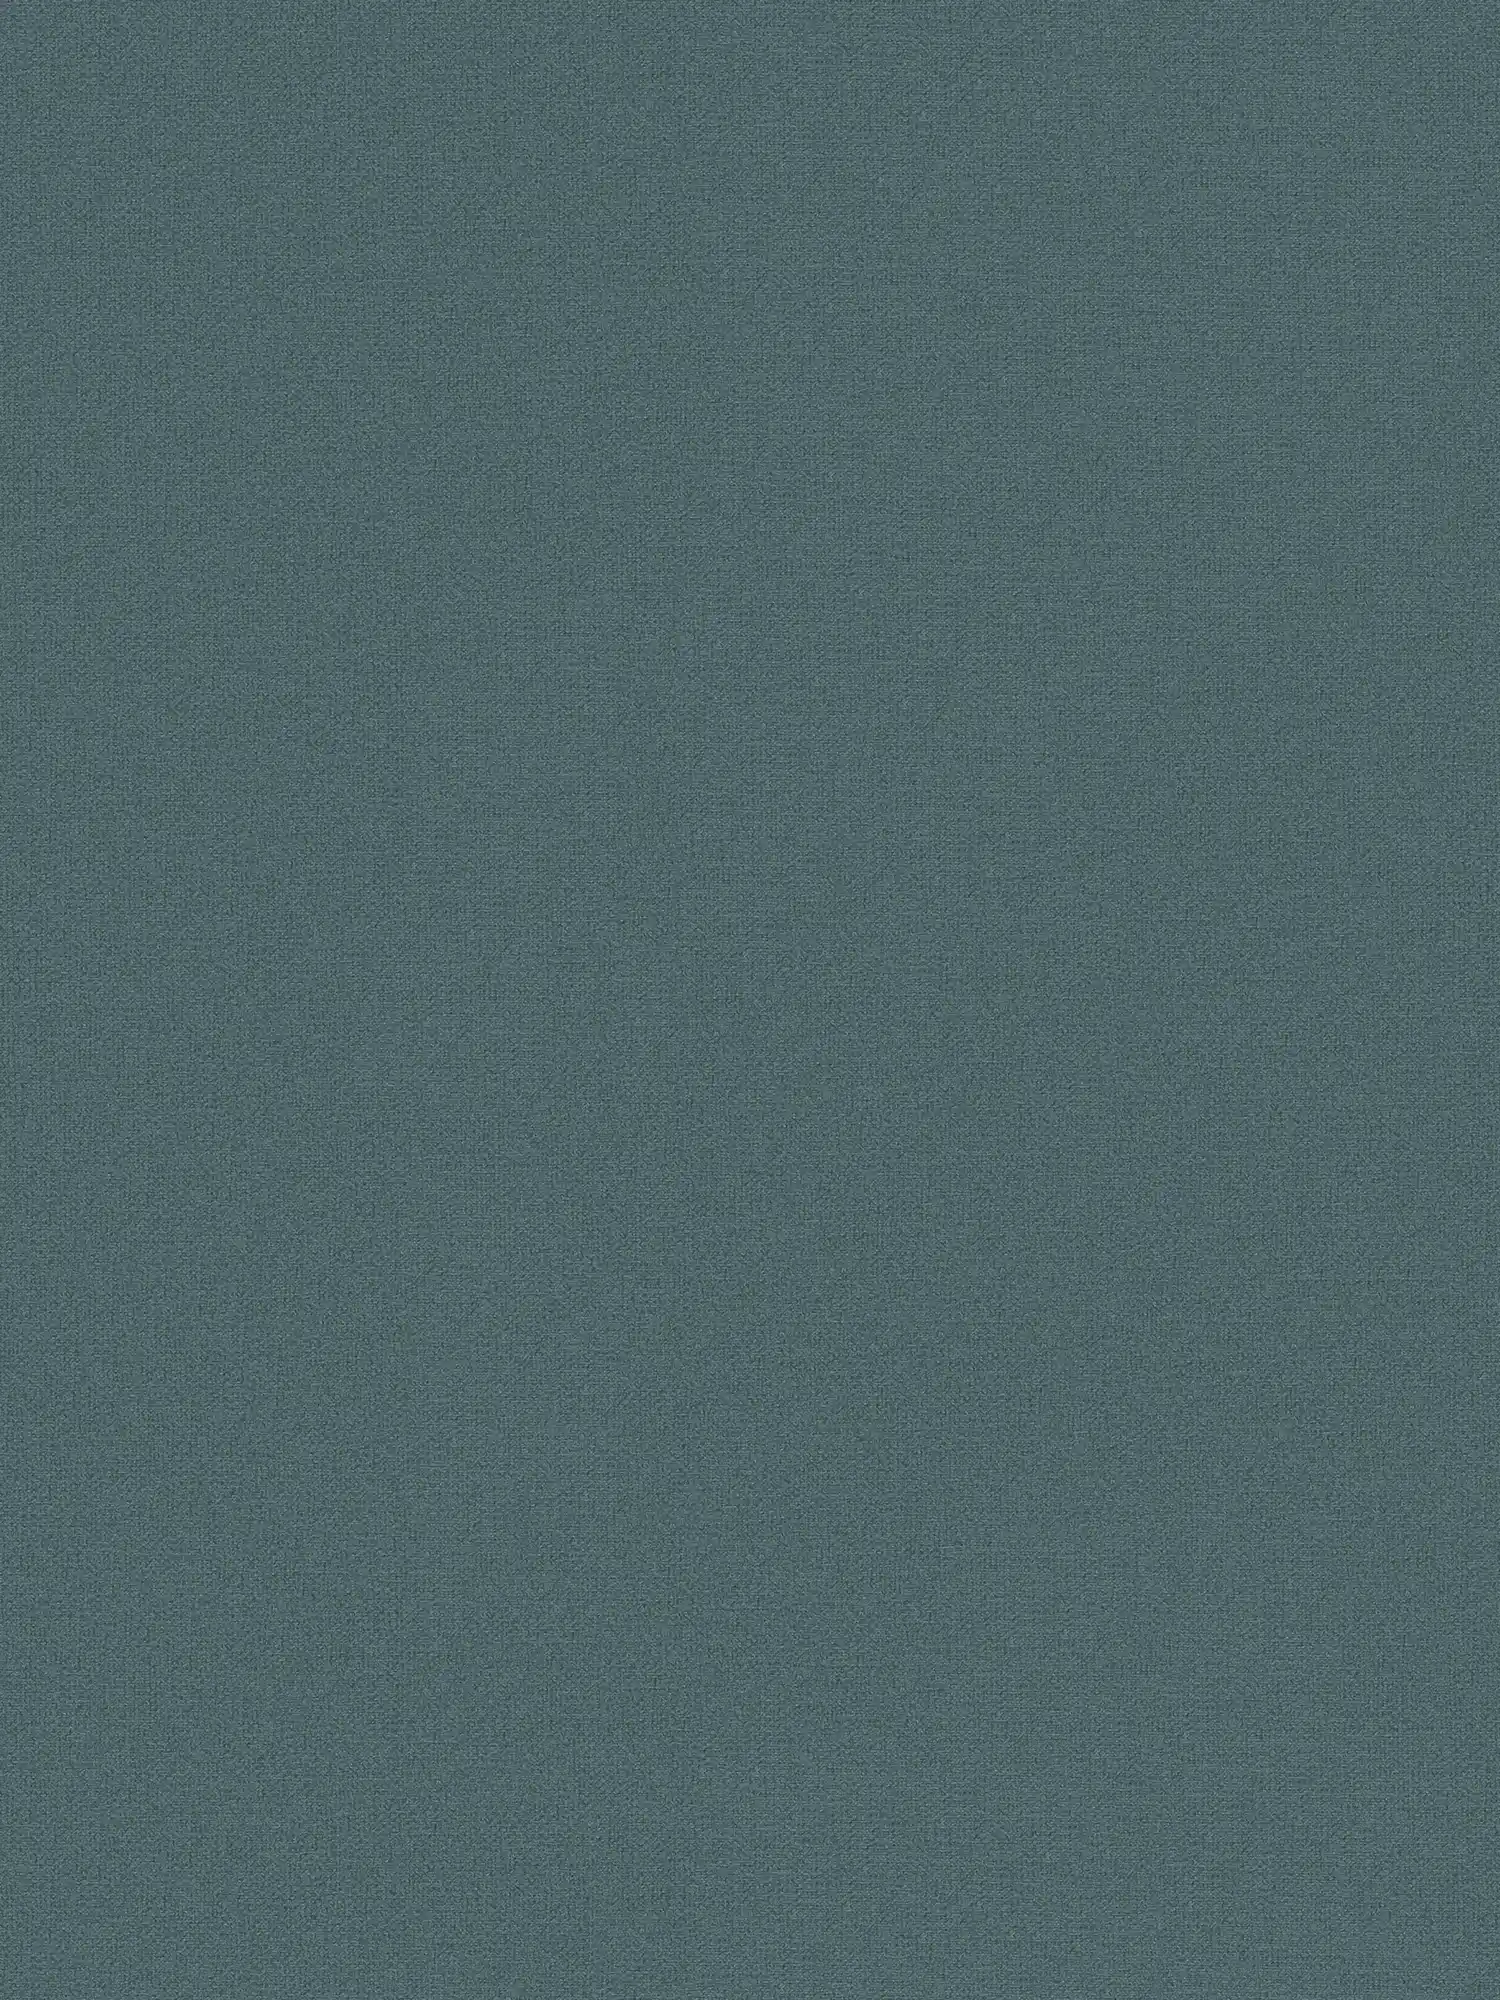 Plain non-woven wallpaper with linen look PVC-free - Blue, Grey
